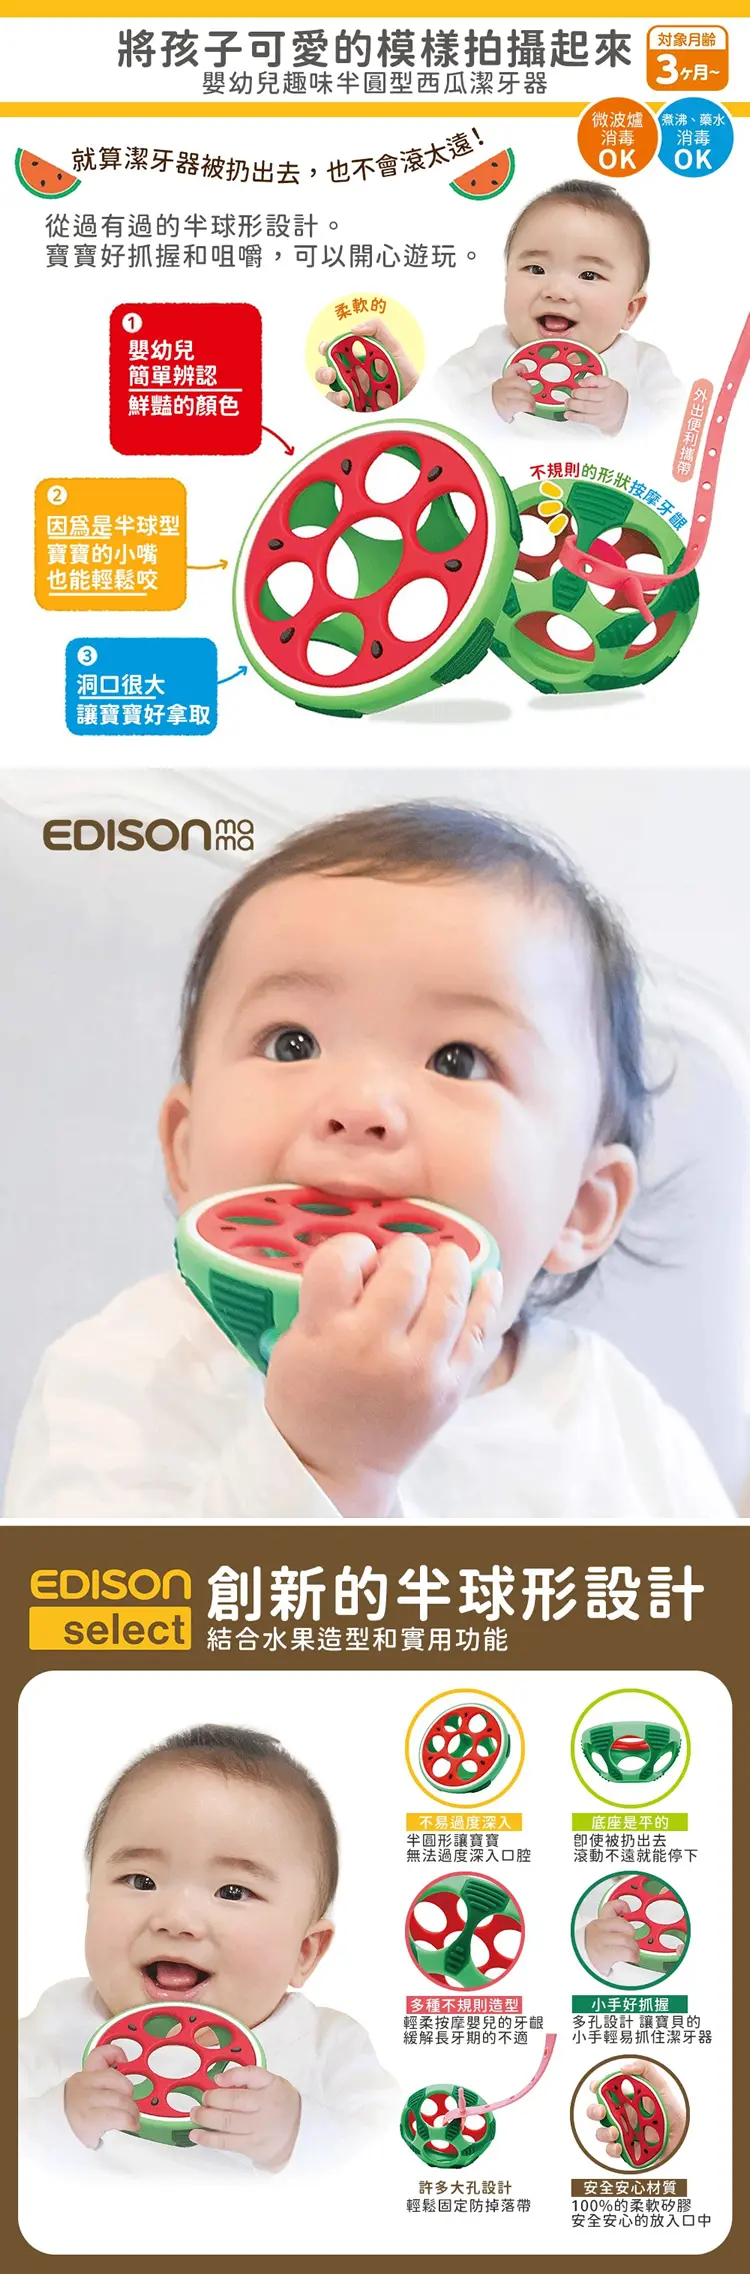 Edison 西瓜牙膠